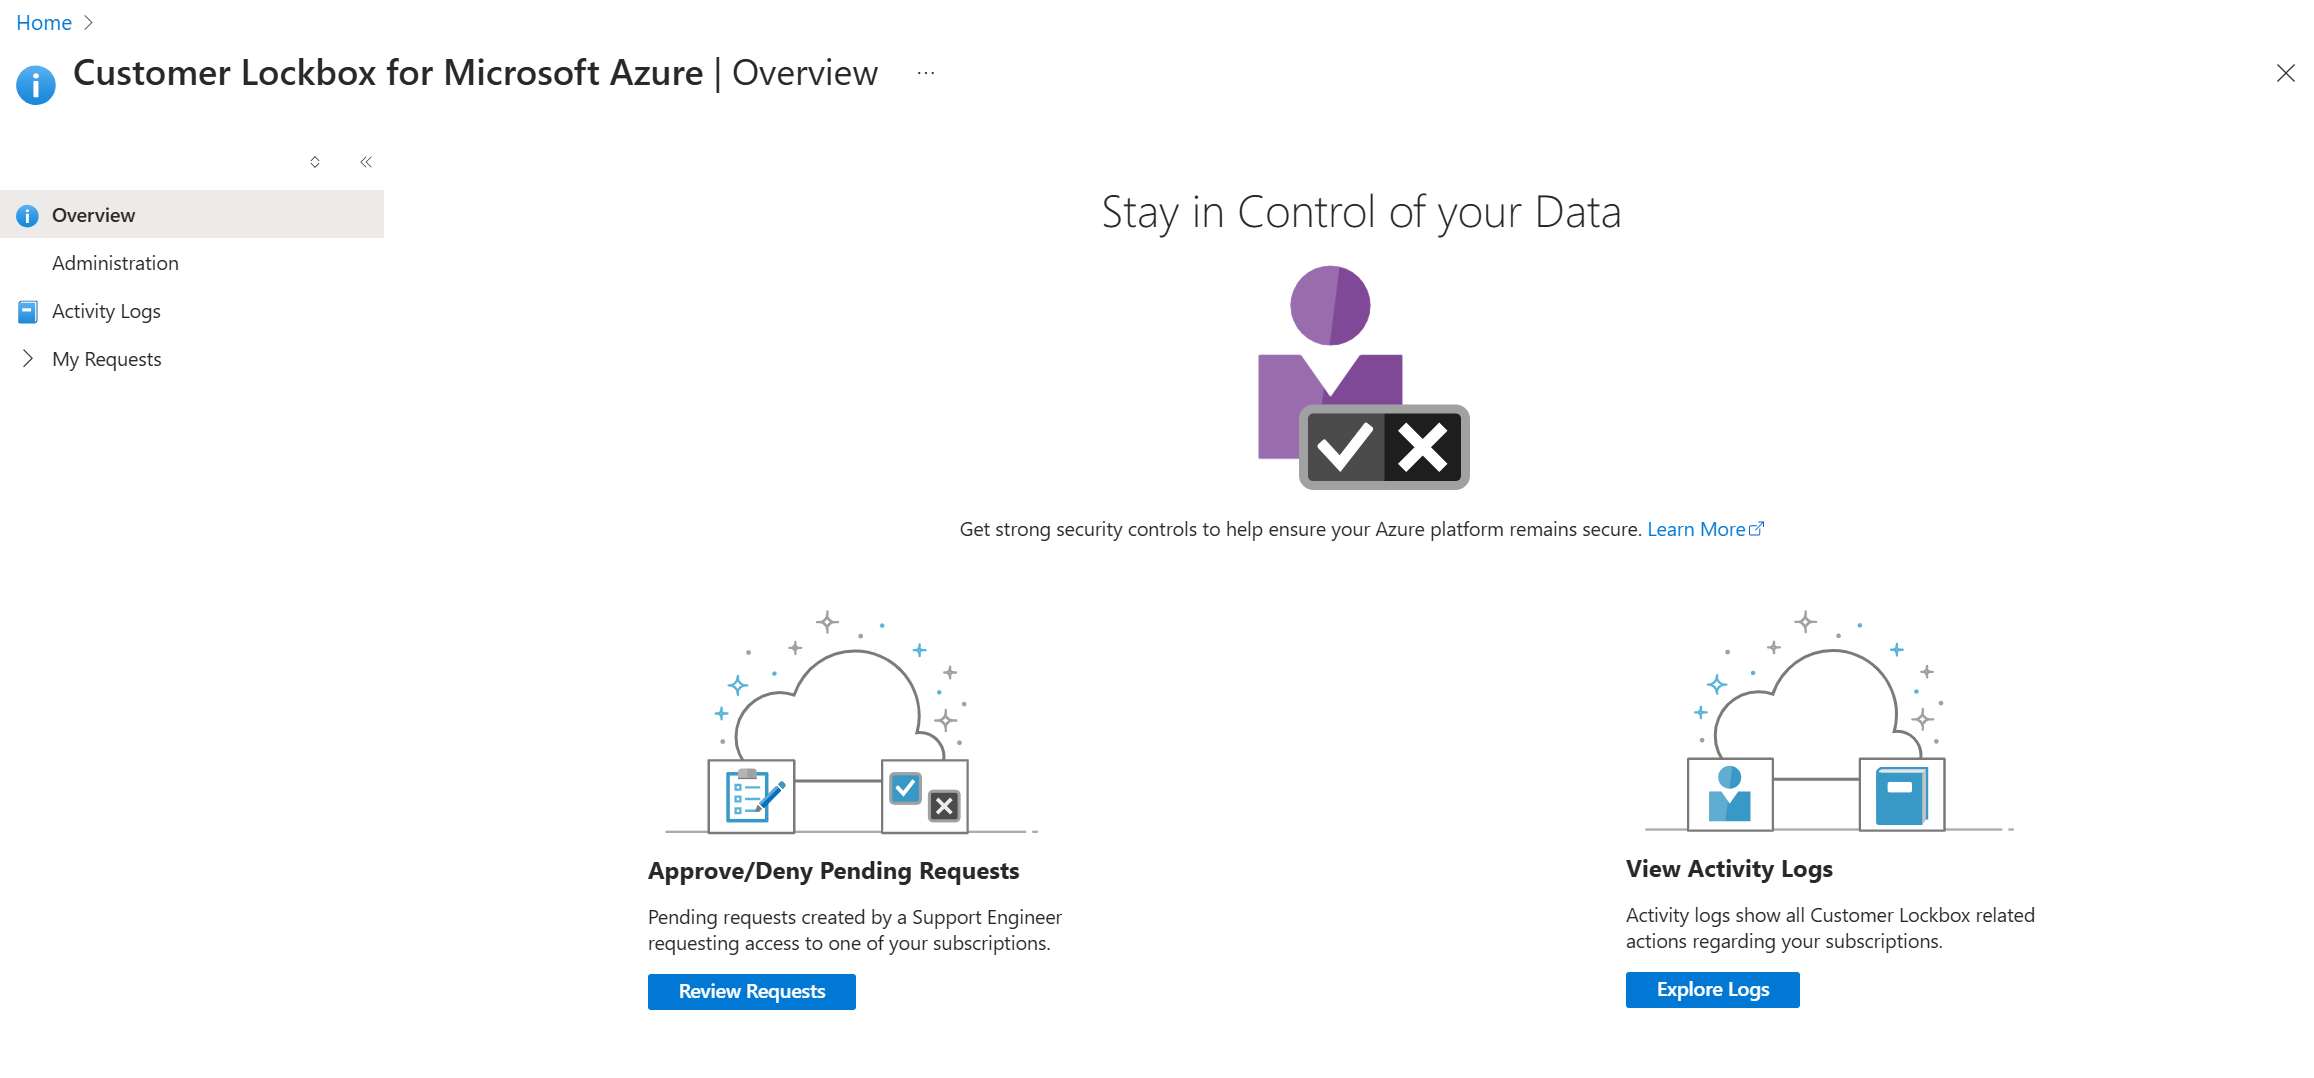 A screenshot of the Customer Lockbox for Microsoft Azure landing page.